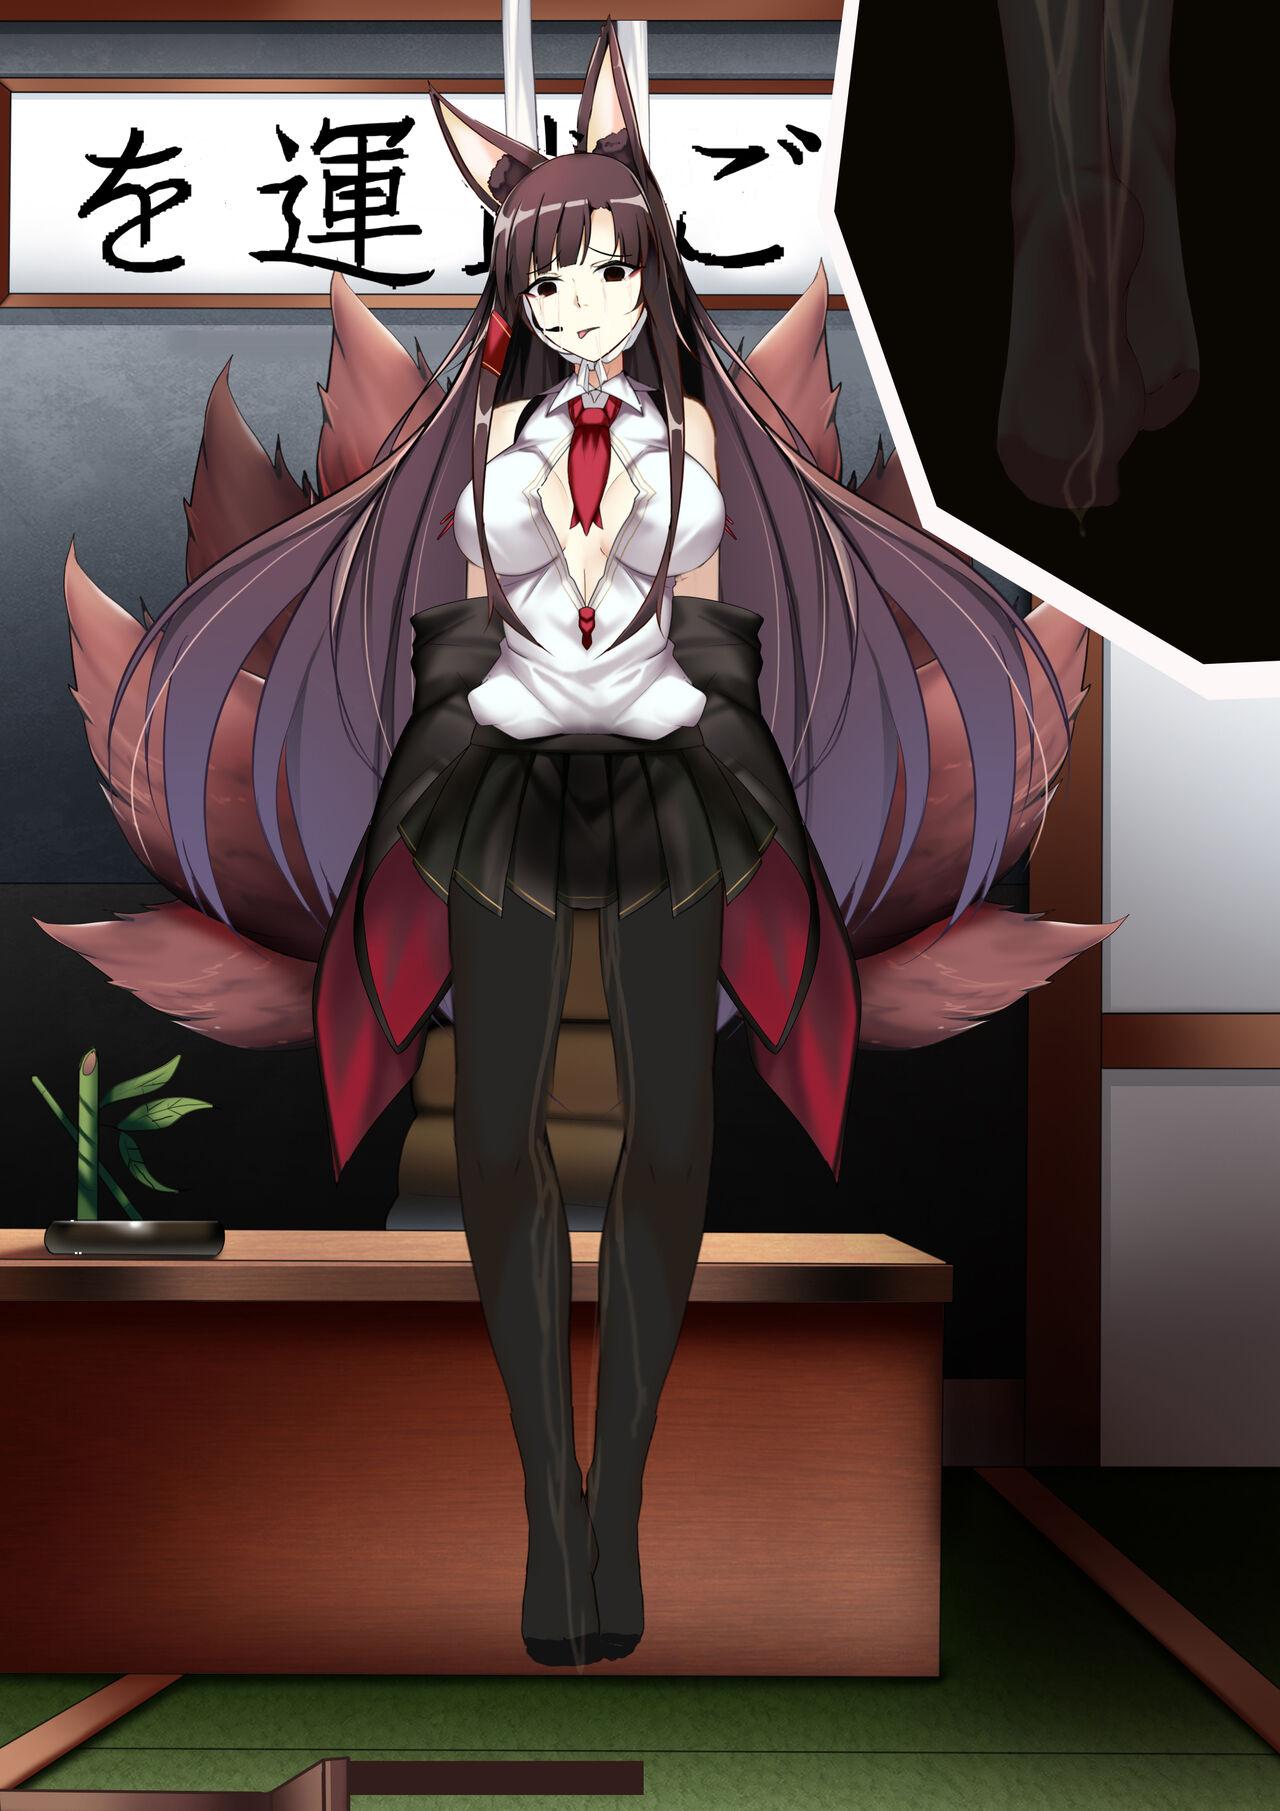 Akagi hanged herself in her office 47